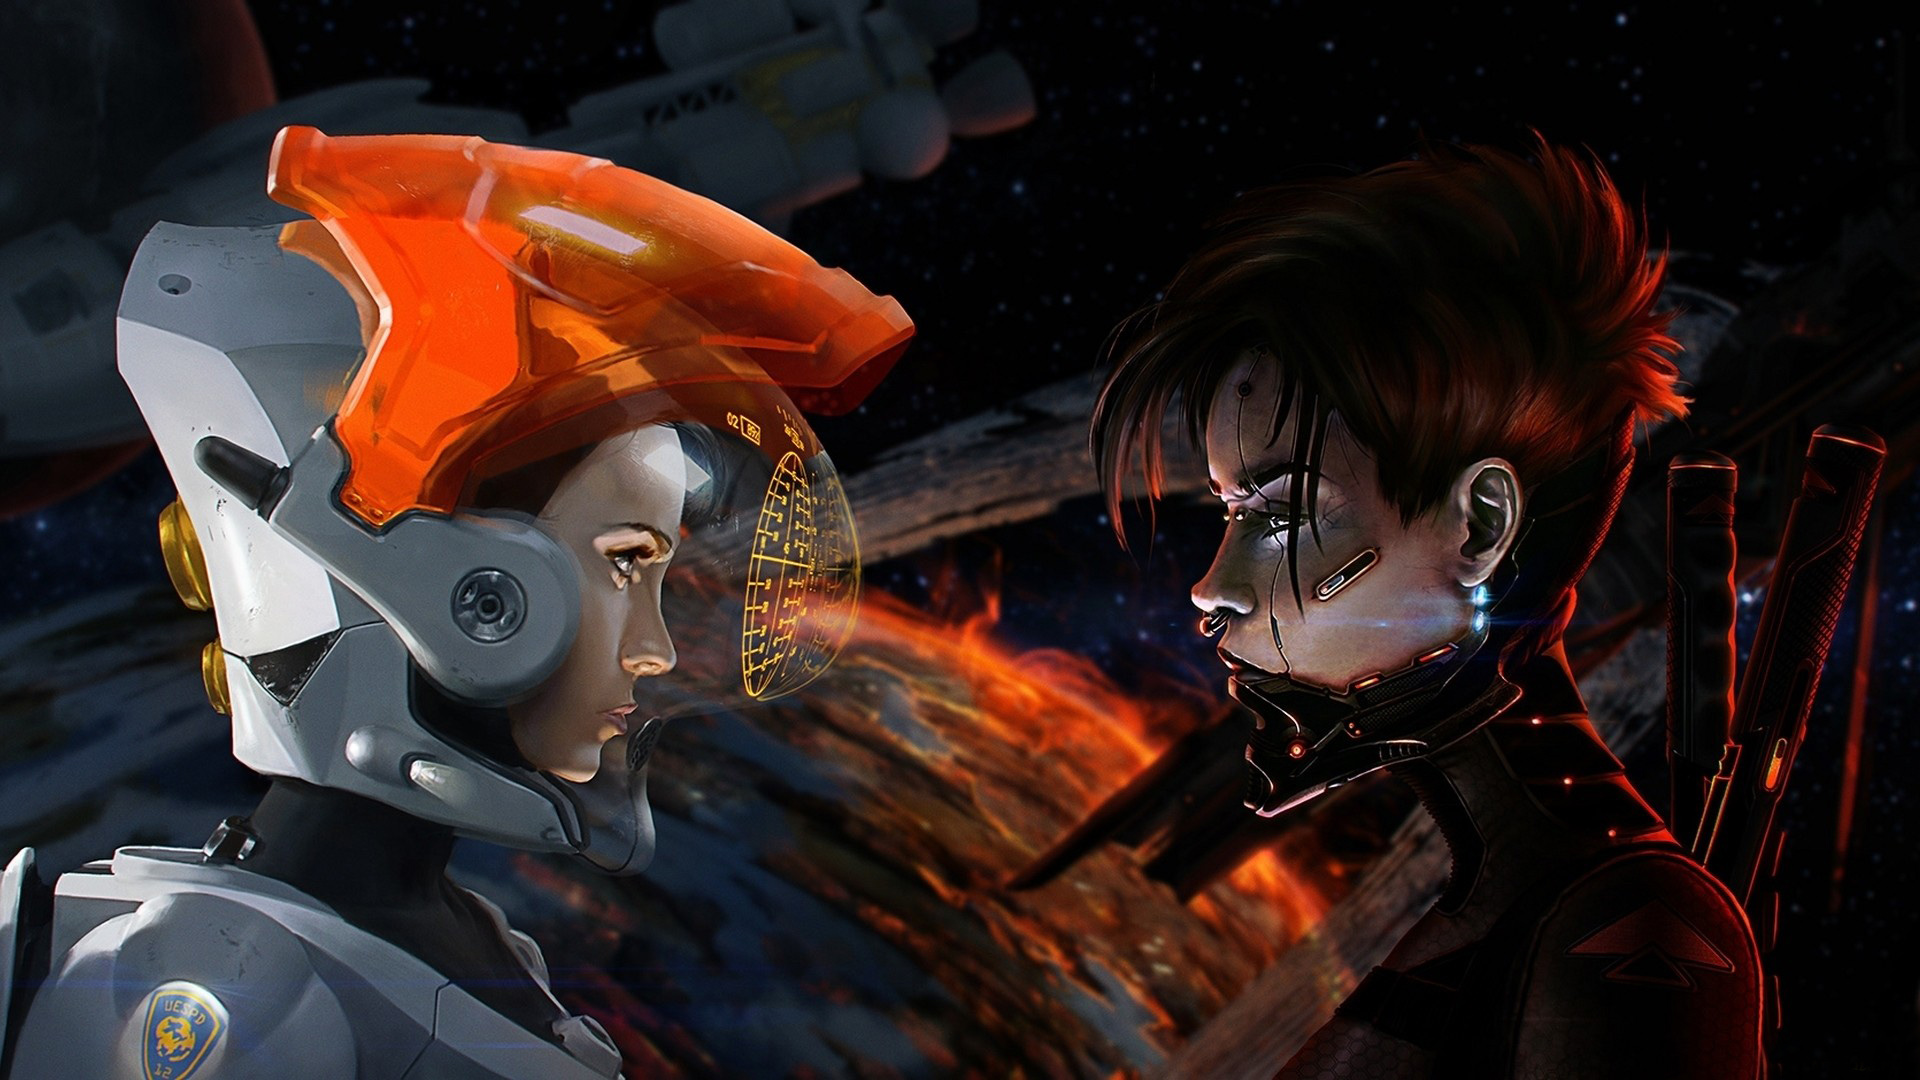 Women Face To Face Spaceship Futuristic Science Fiction Helmet Digital Art Artwork 1920x1080